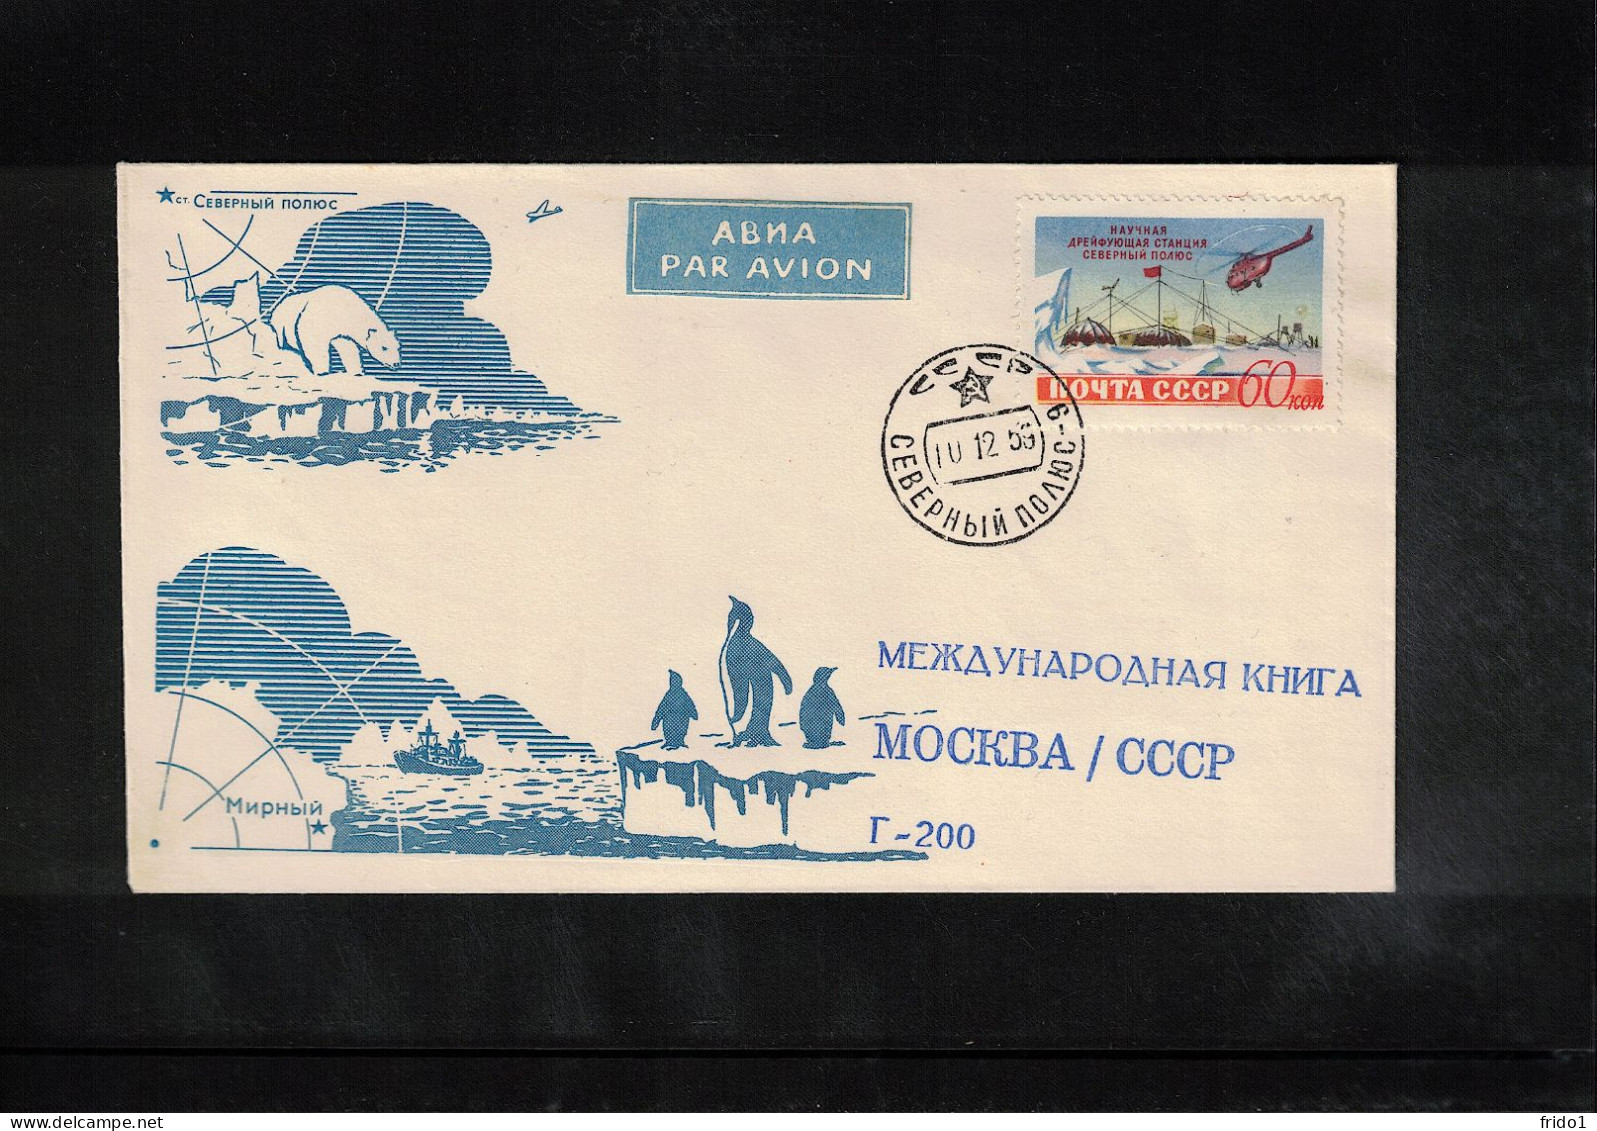 Russia USSR 1959 North Pole Station Sewernyi Poljus Interesting Cover - Forschungsstationen & Arctic Driftstationen